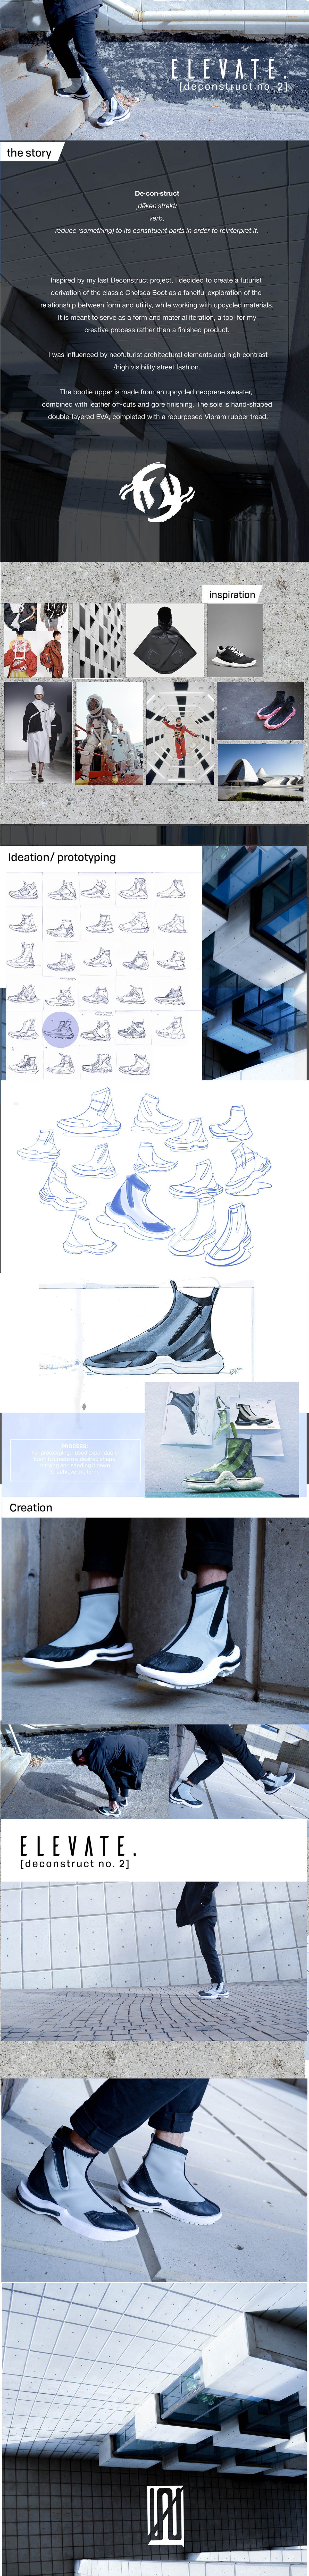 risd vibram adidas shoe conceptkicks sneaker art design upcycling hypebeast